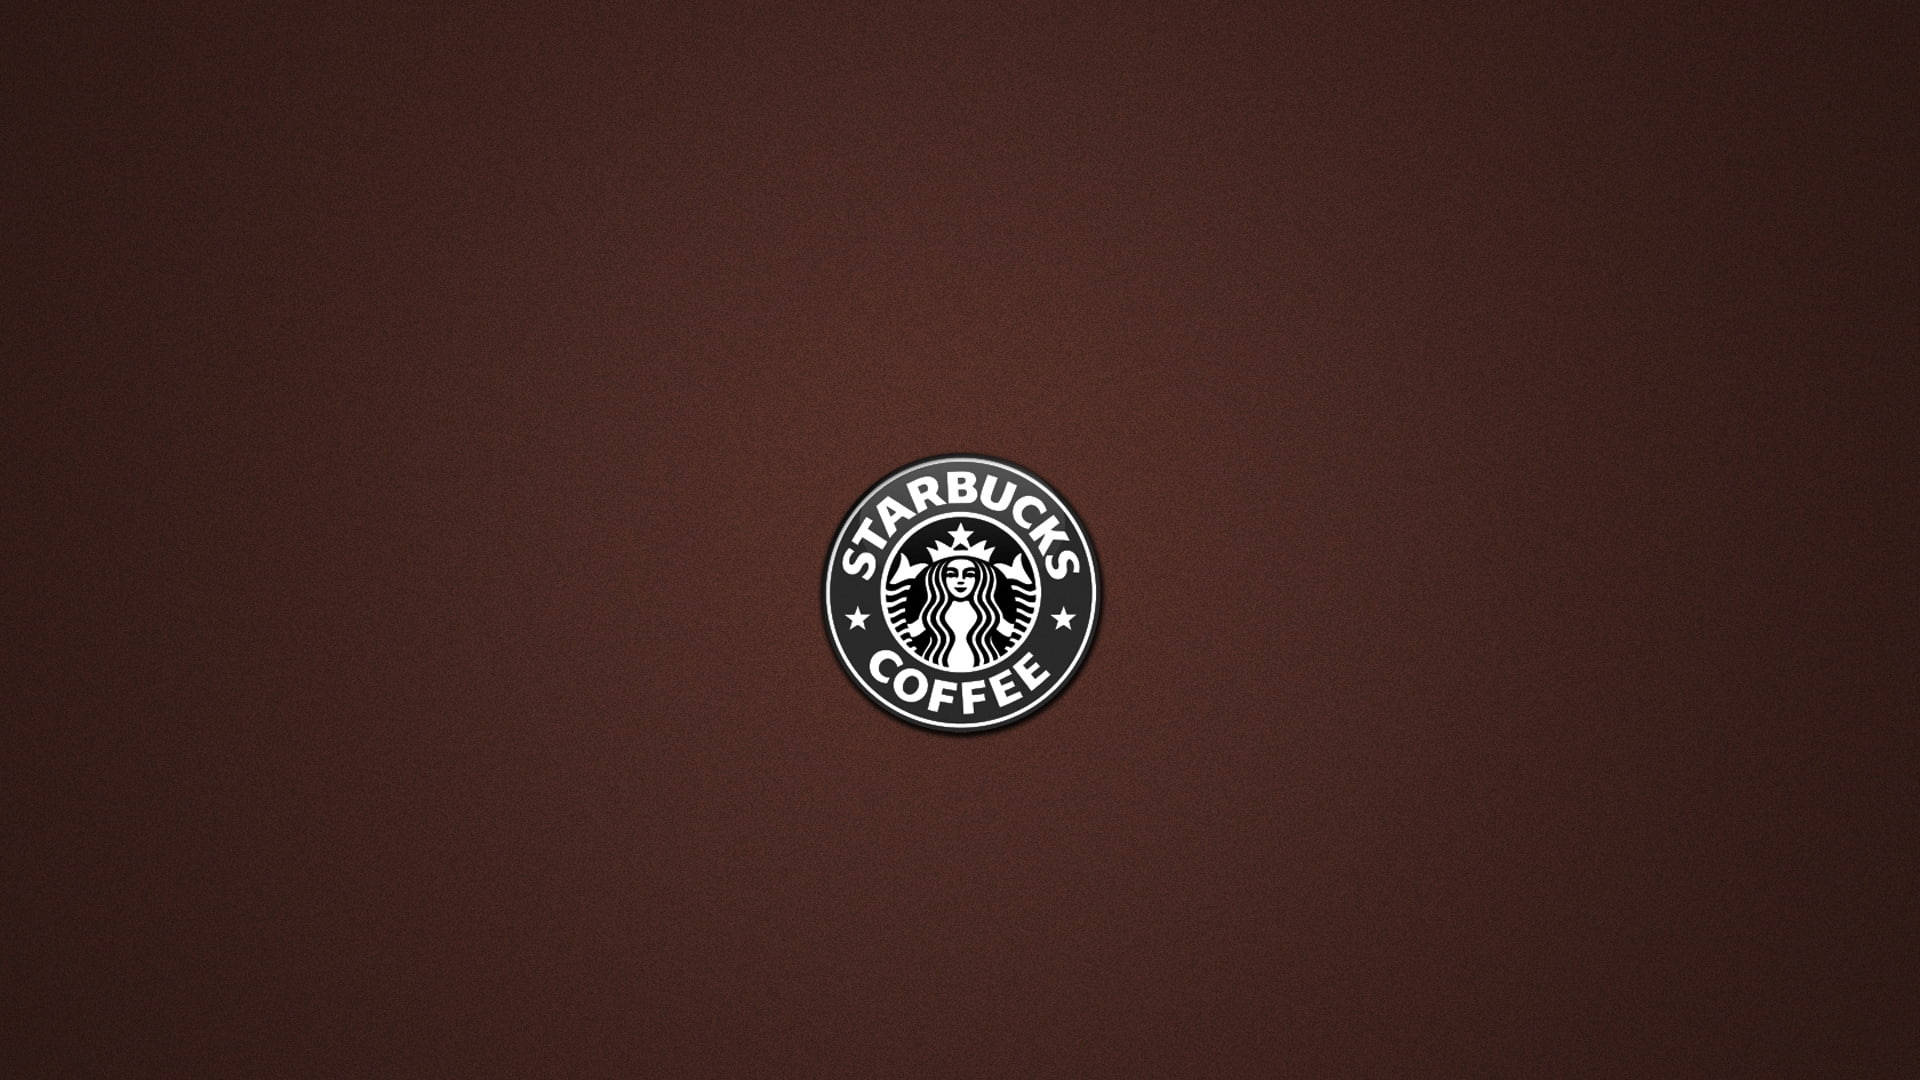 Starbucks Logo On Brown Background Background